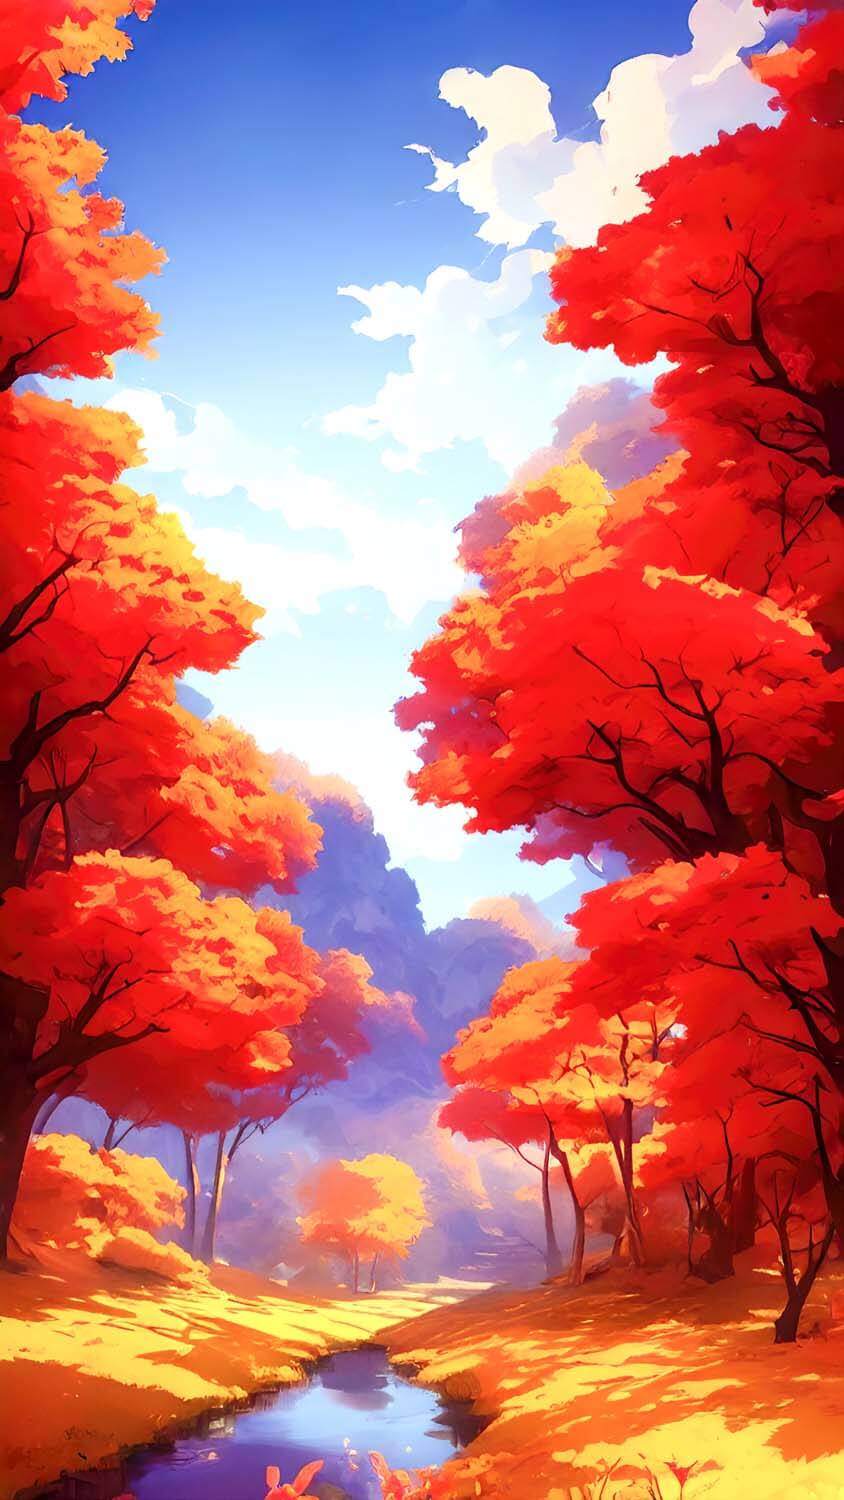 Autumn Season Forest iPhone Wallpaper HD